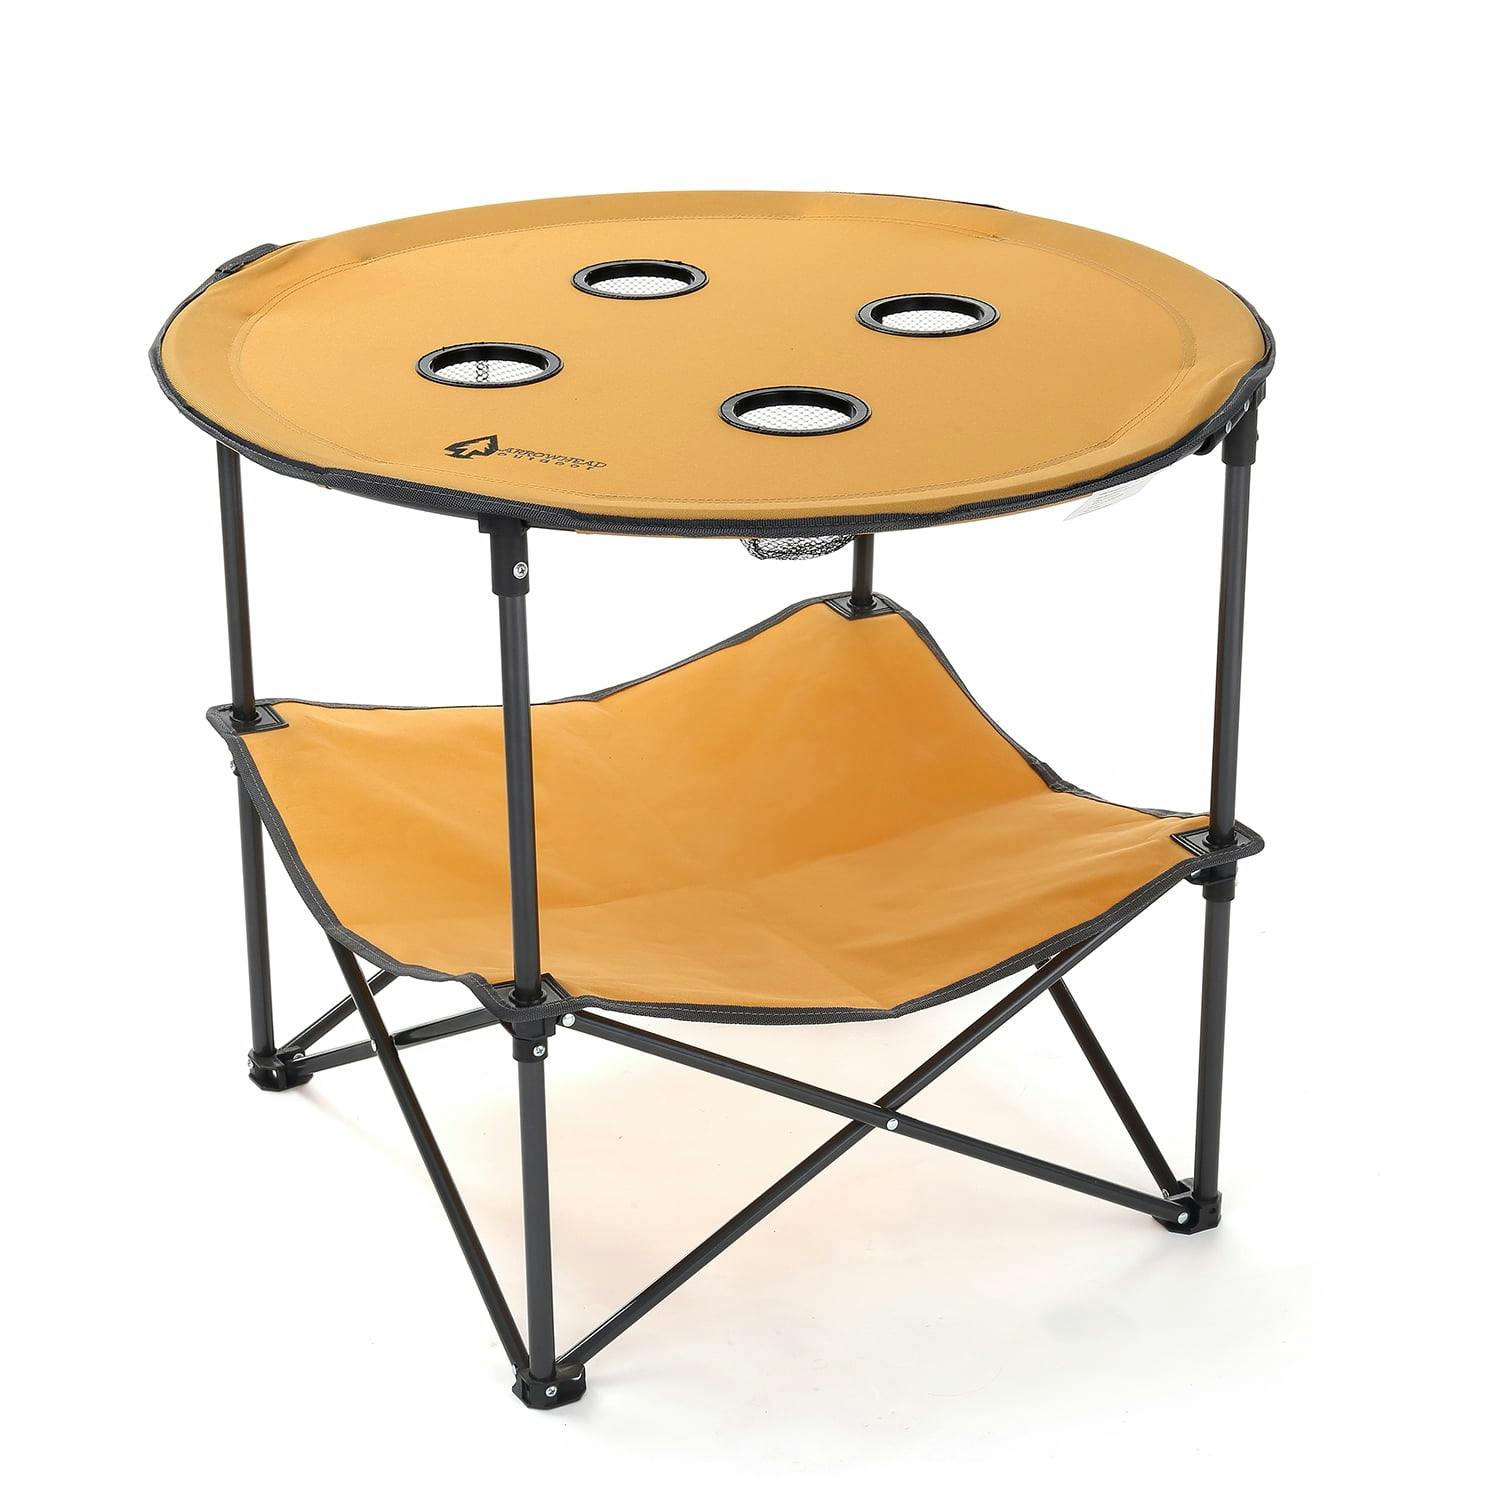 Arrowhead 28" Round Portable Folding Table with Storage - Tan